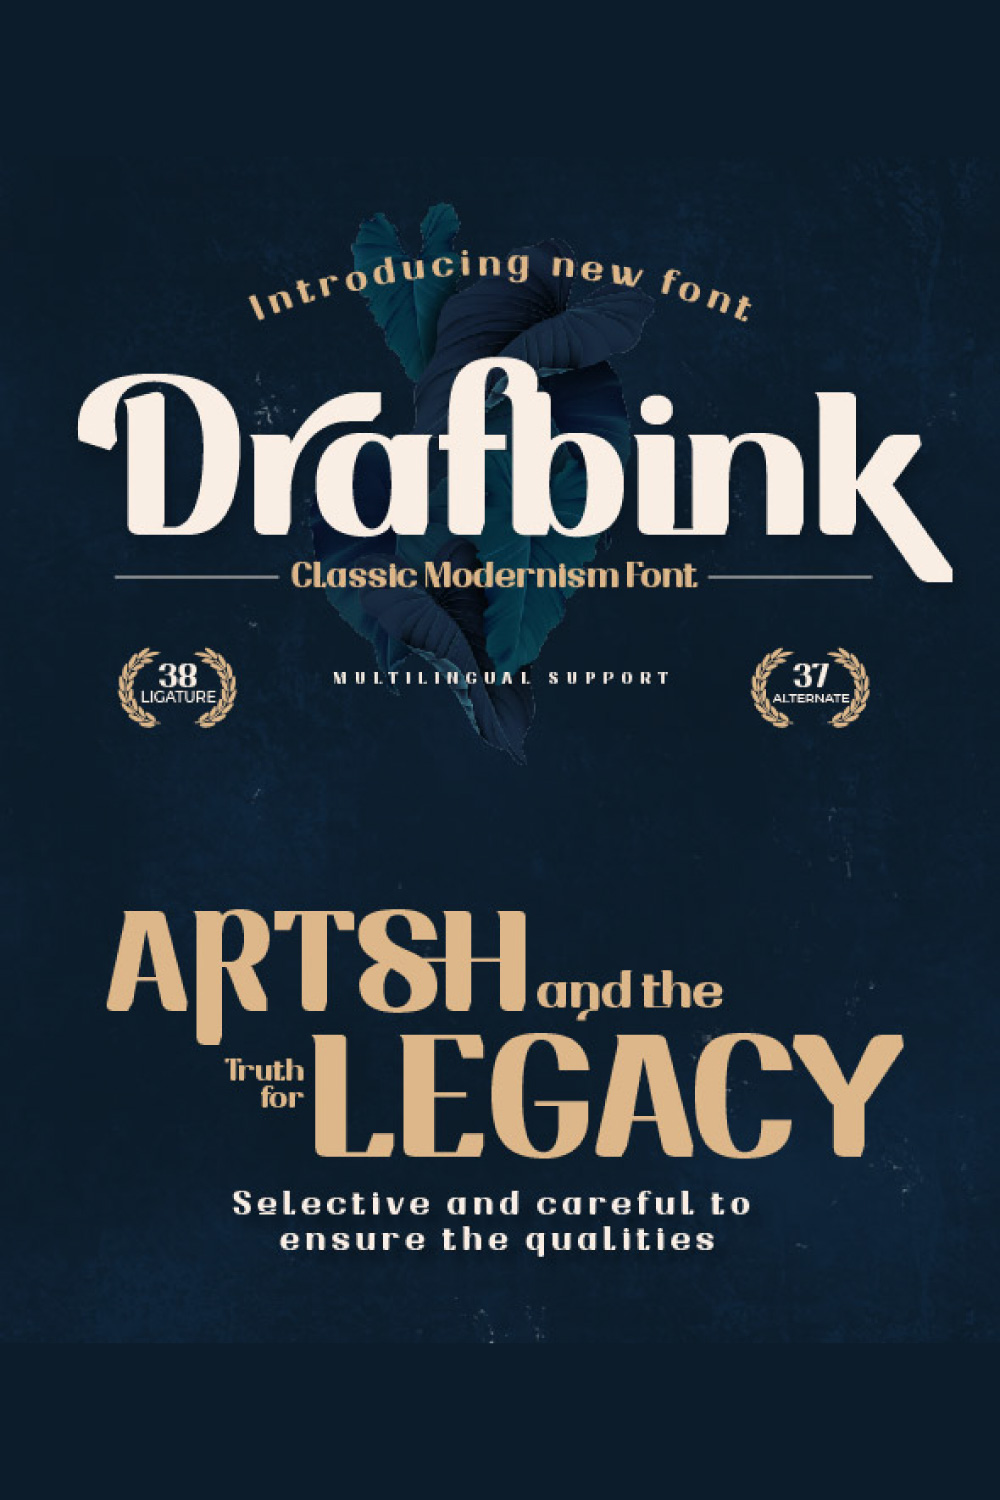 Drafbink | Serif Classic Modernism pinterest preview image.